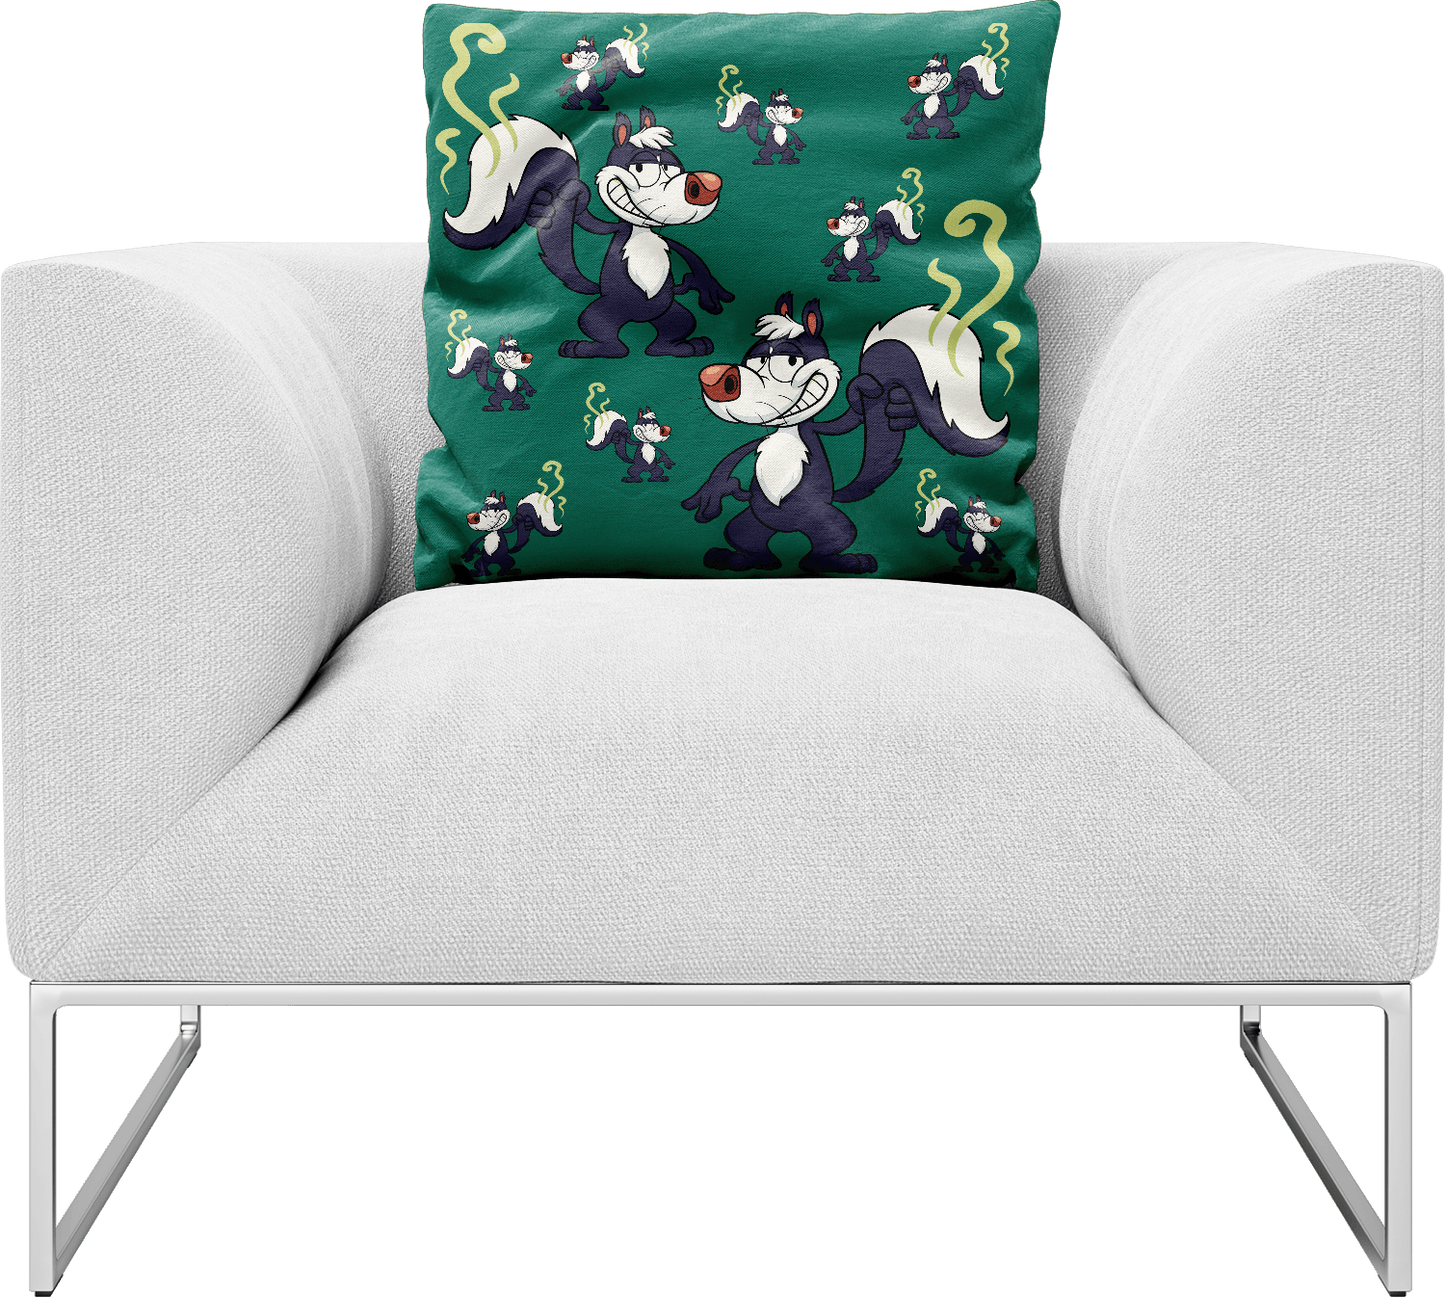 Stinky Skunk Pillows Cushions - fungear.com.au